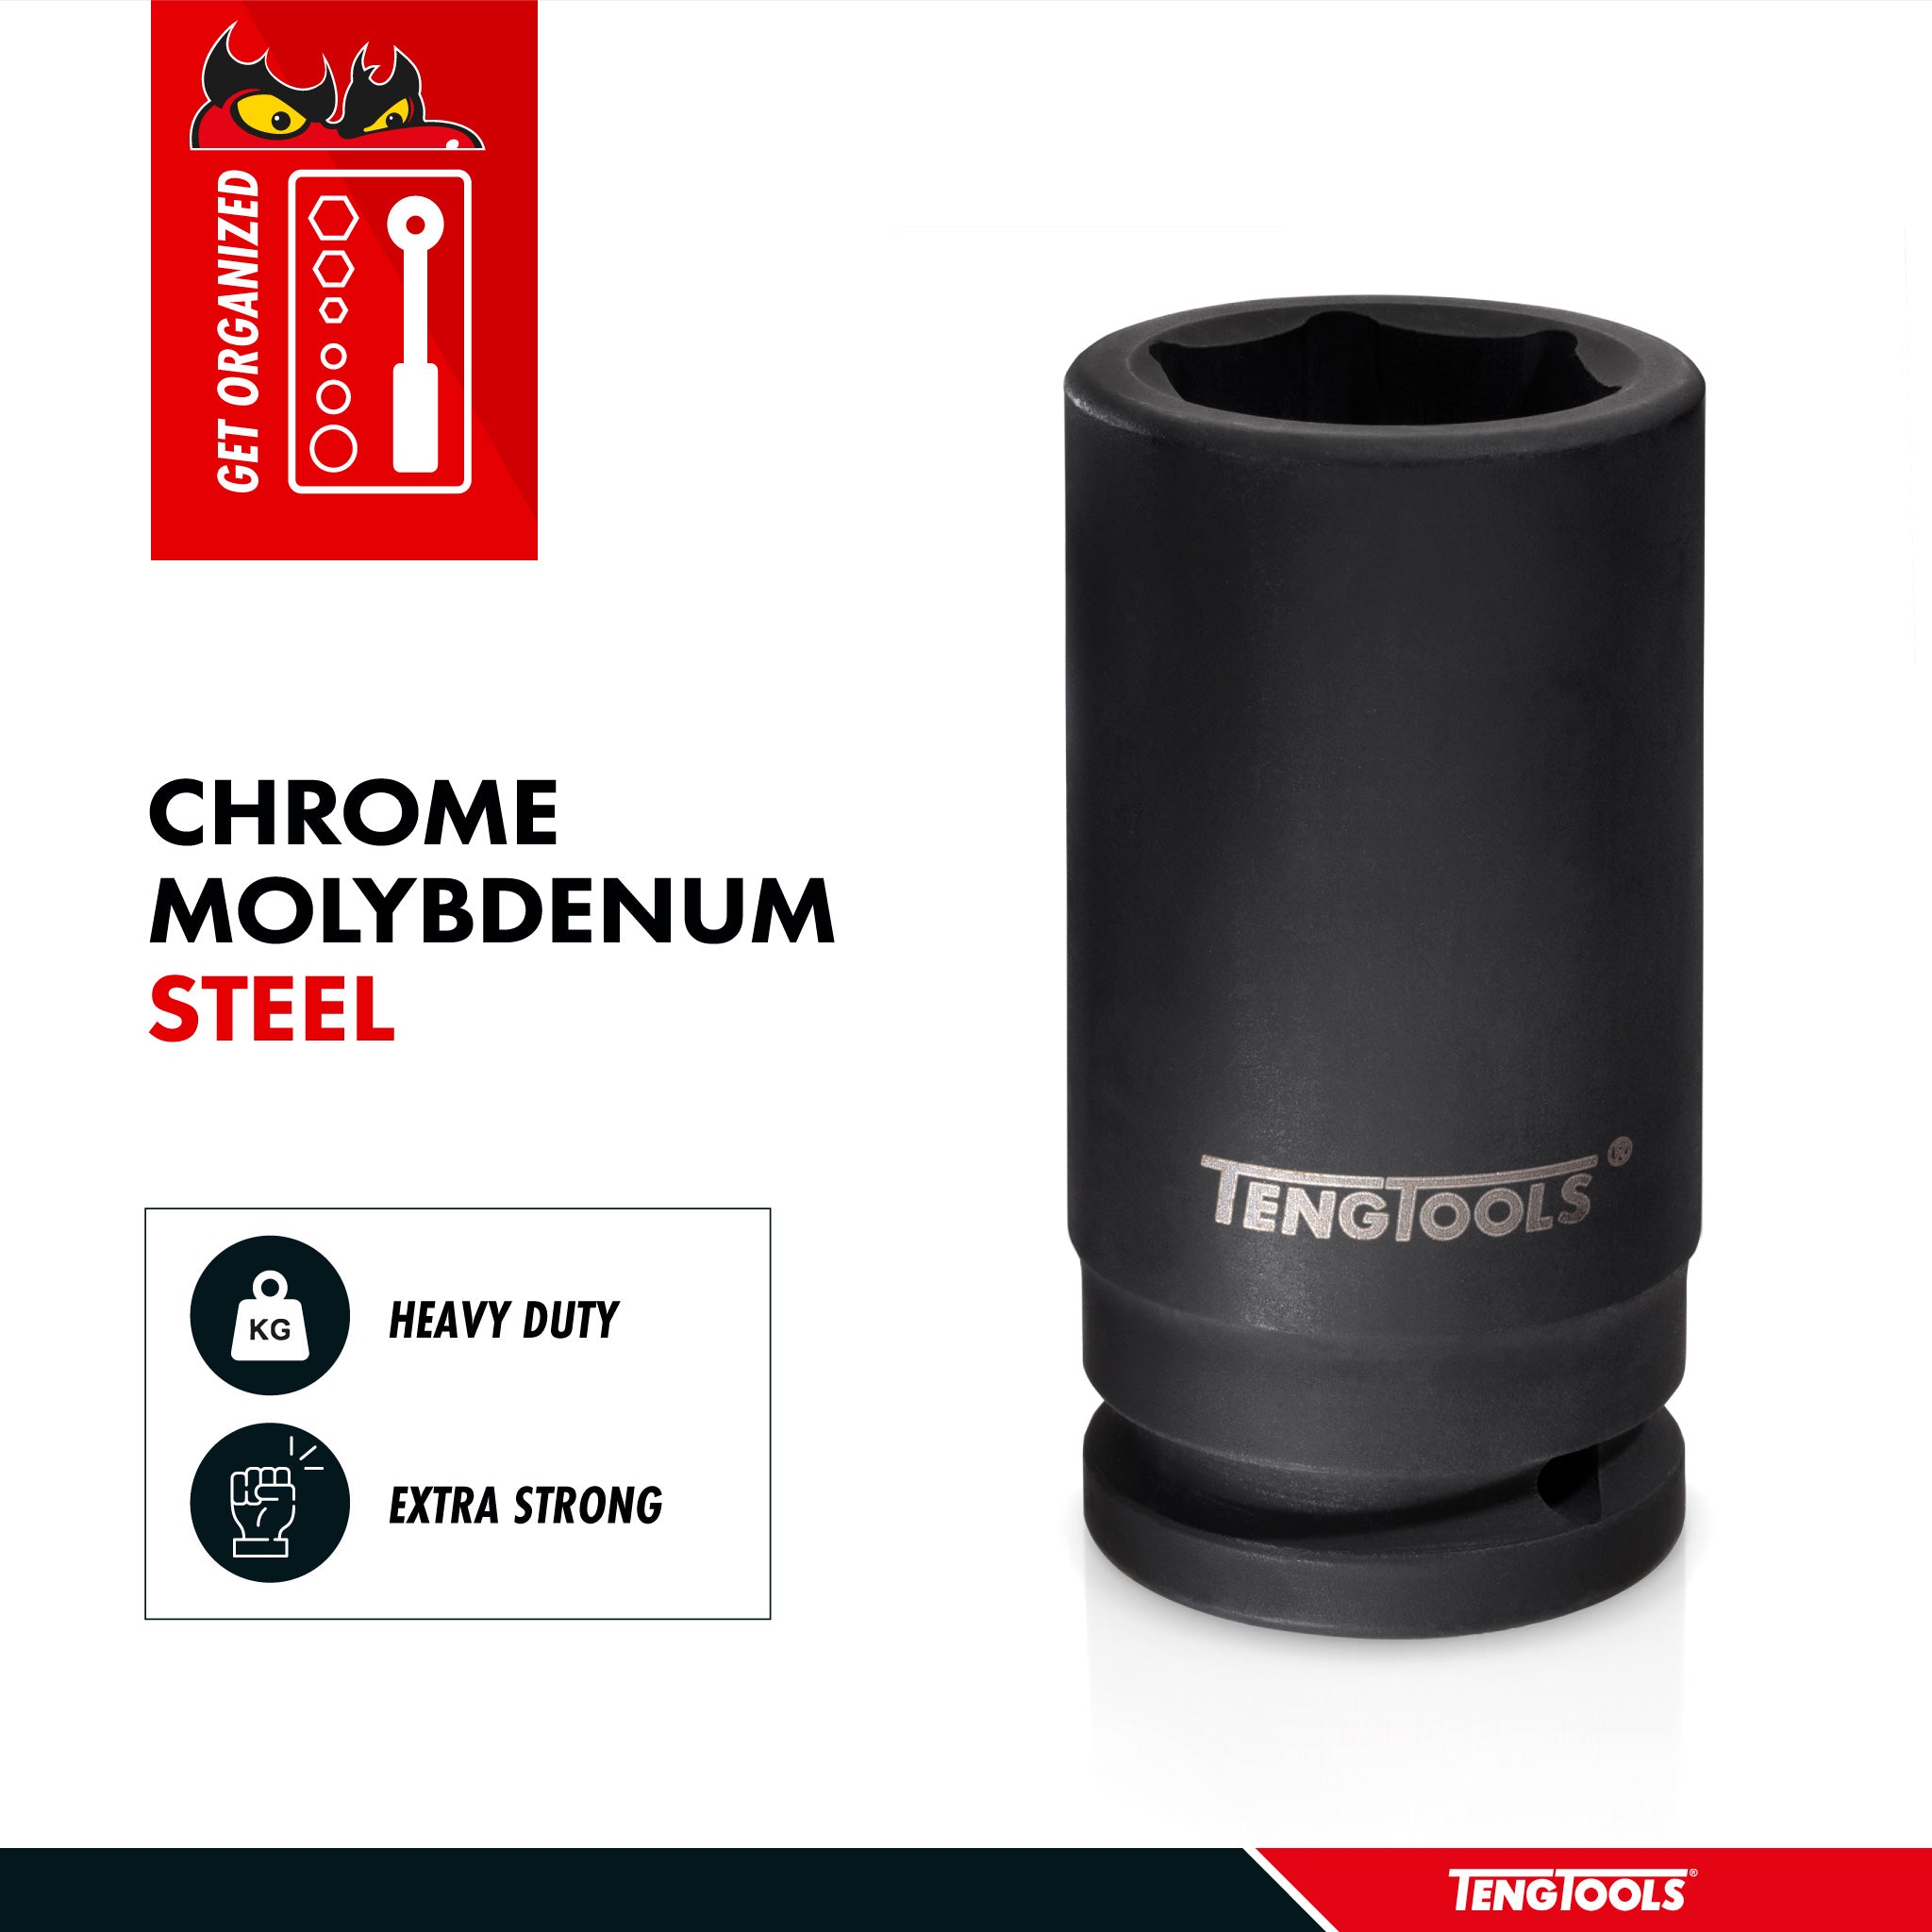 Teng Tools 6 Point 3/4 Inch Drive SAE Deep Chrome Molybdenum Impact Sockets - 13/16